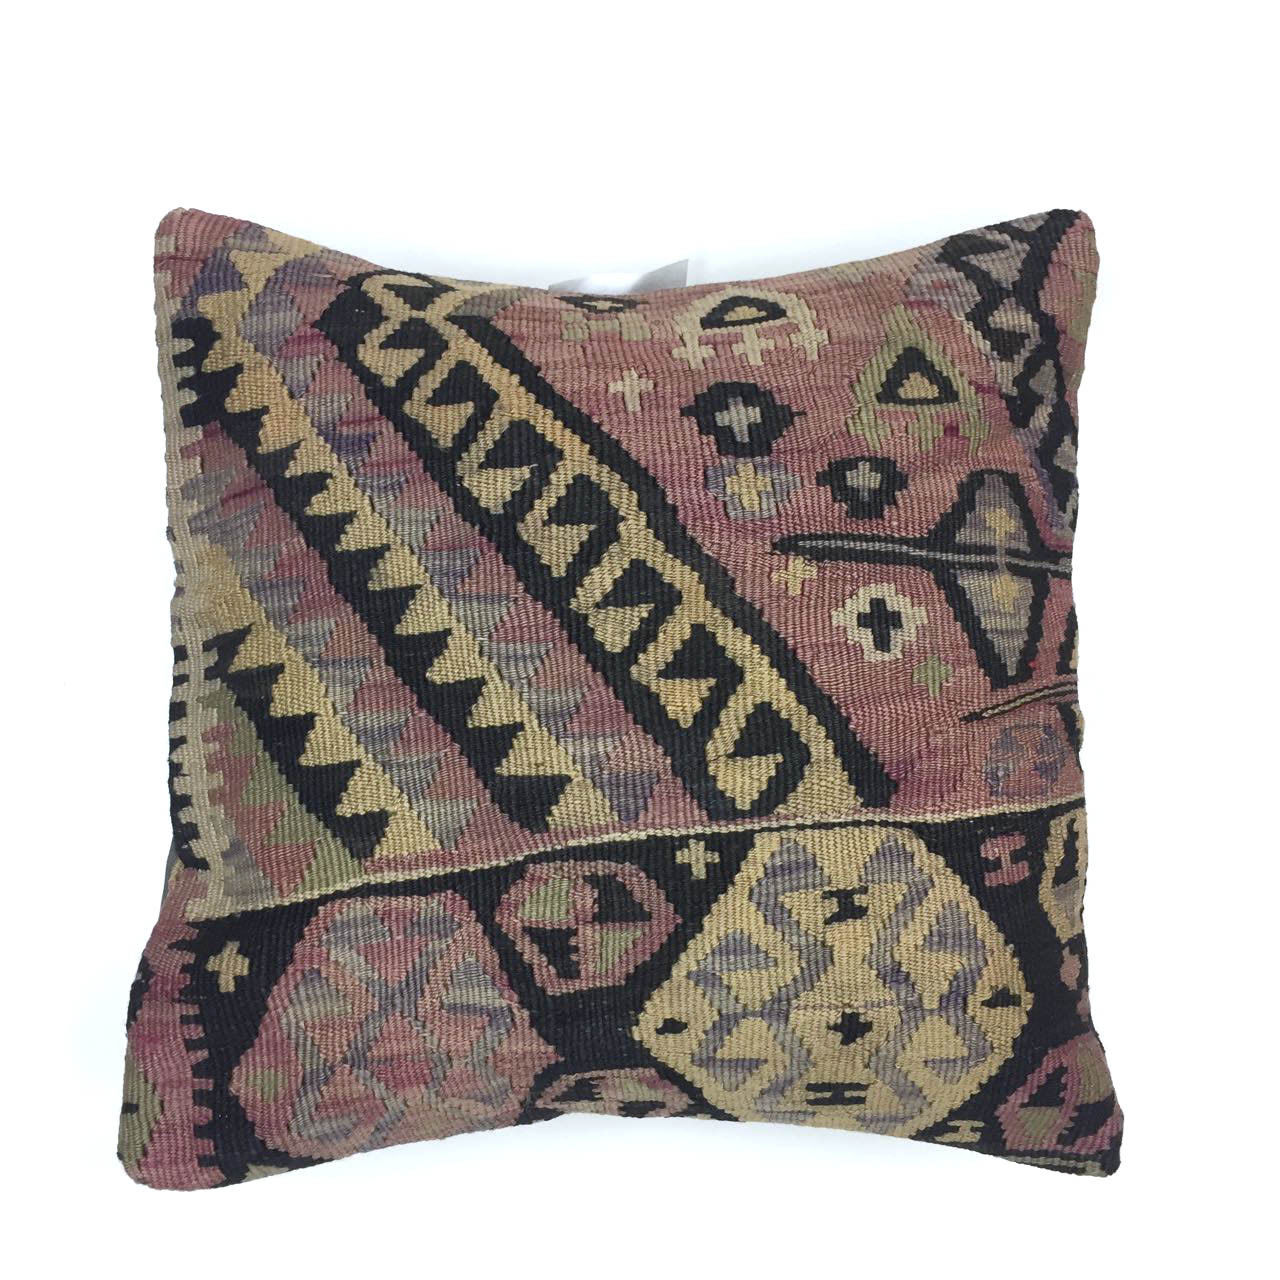 Handmade Kilim Cushion Cover, Kelim Pillow 50x50cm Turkish  Moroccan   5088 Home, Furniture & DIY:Home Decor:Cushions kilimshop.myshopify.com